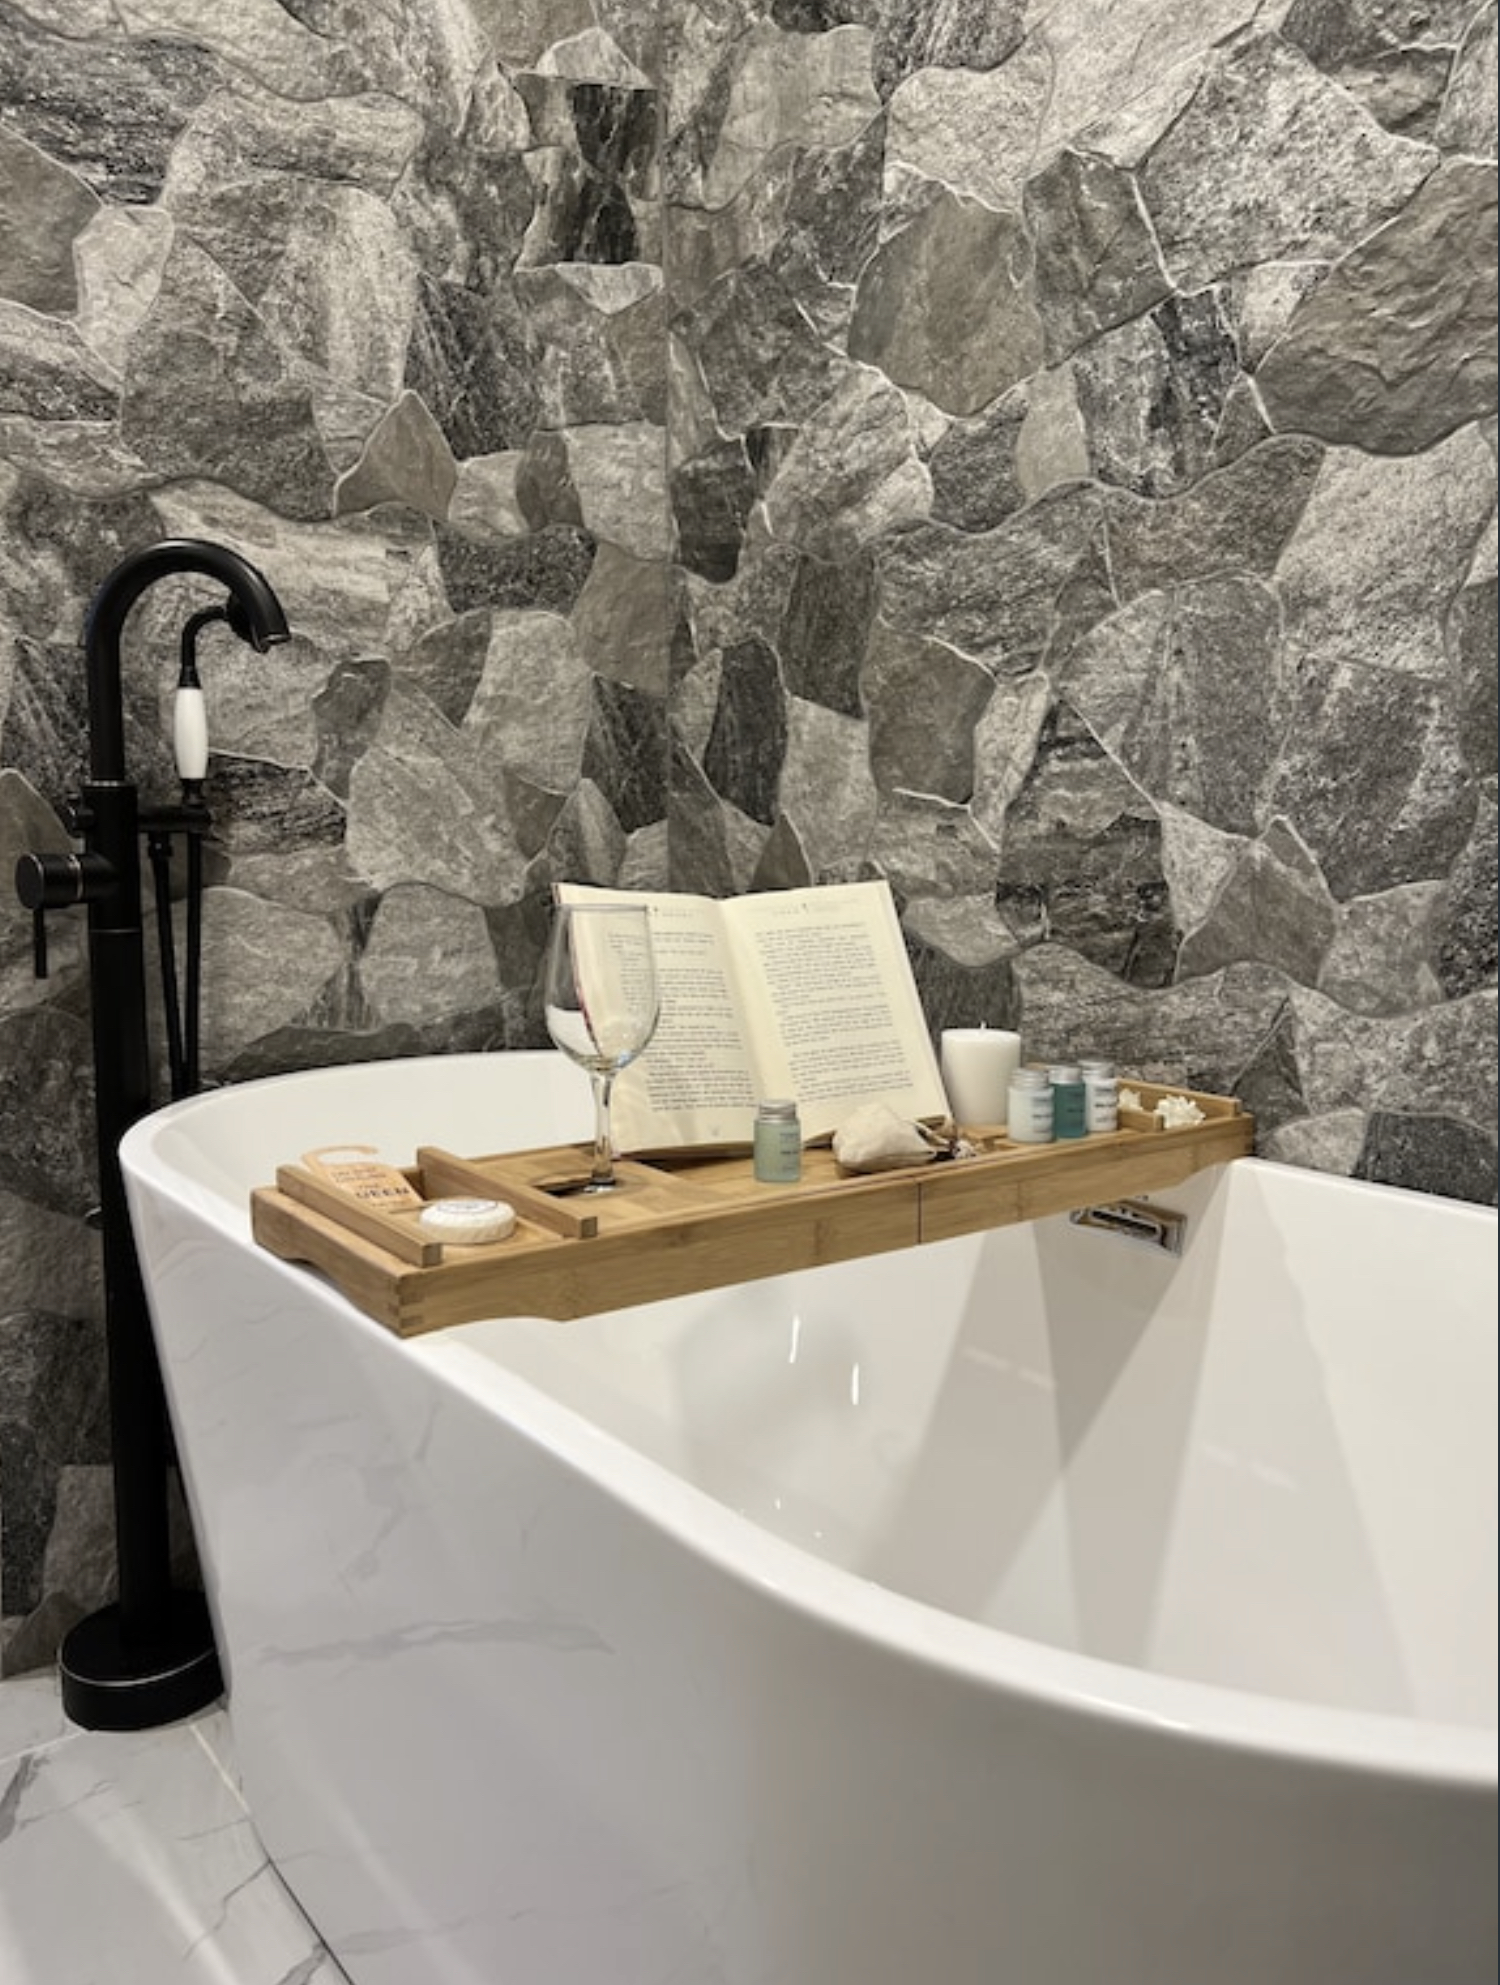 Acadia wilderness lodge bathtub and interior